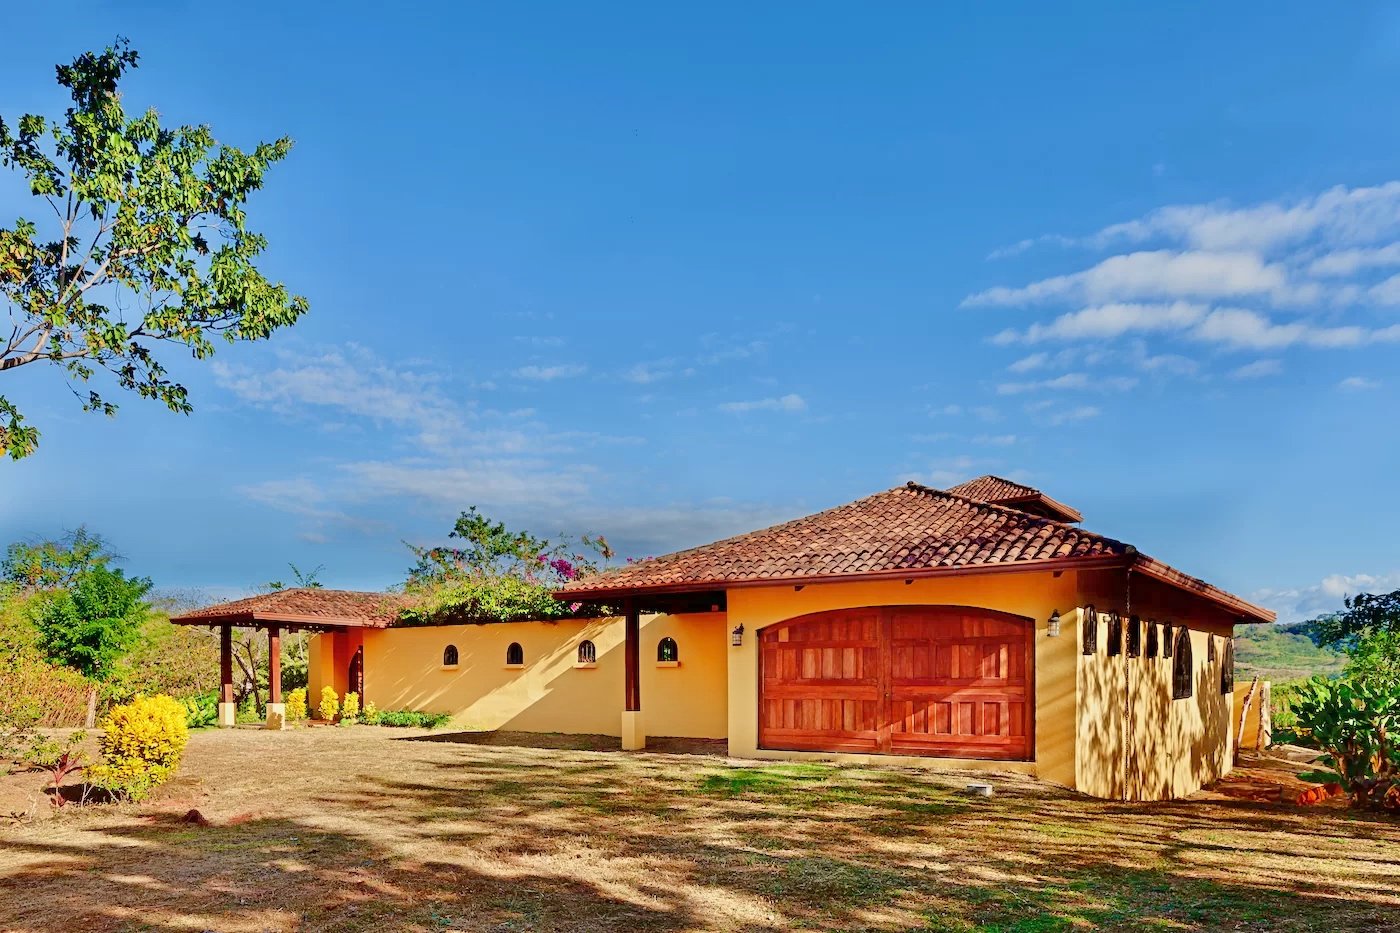 Hacienda-Freedom-on-15-Acres-Off-Grid-Invest-Nicaragua-Real-Estate-San-Juan-del-Sur-Tola-6 (1)FifteenAcreEstateForSaleSanJuanDelSur.jpg